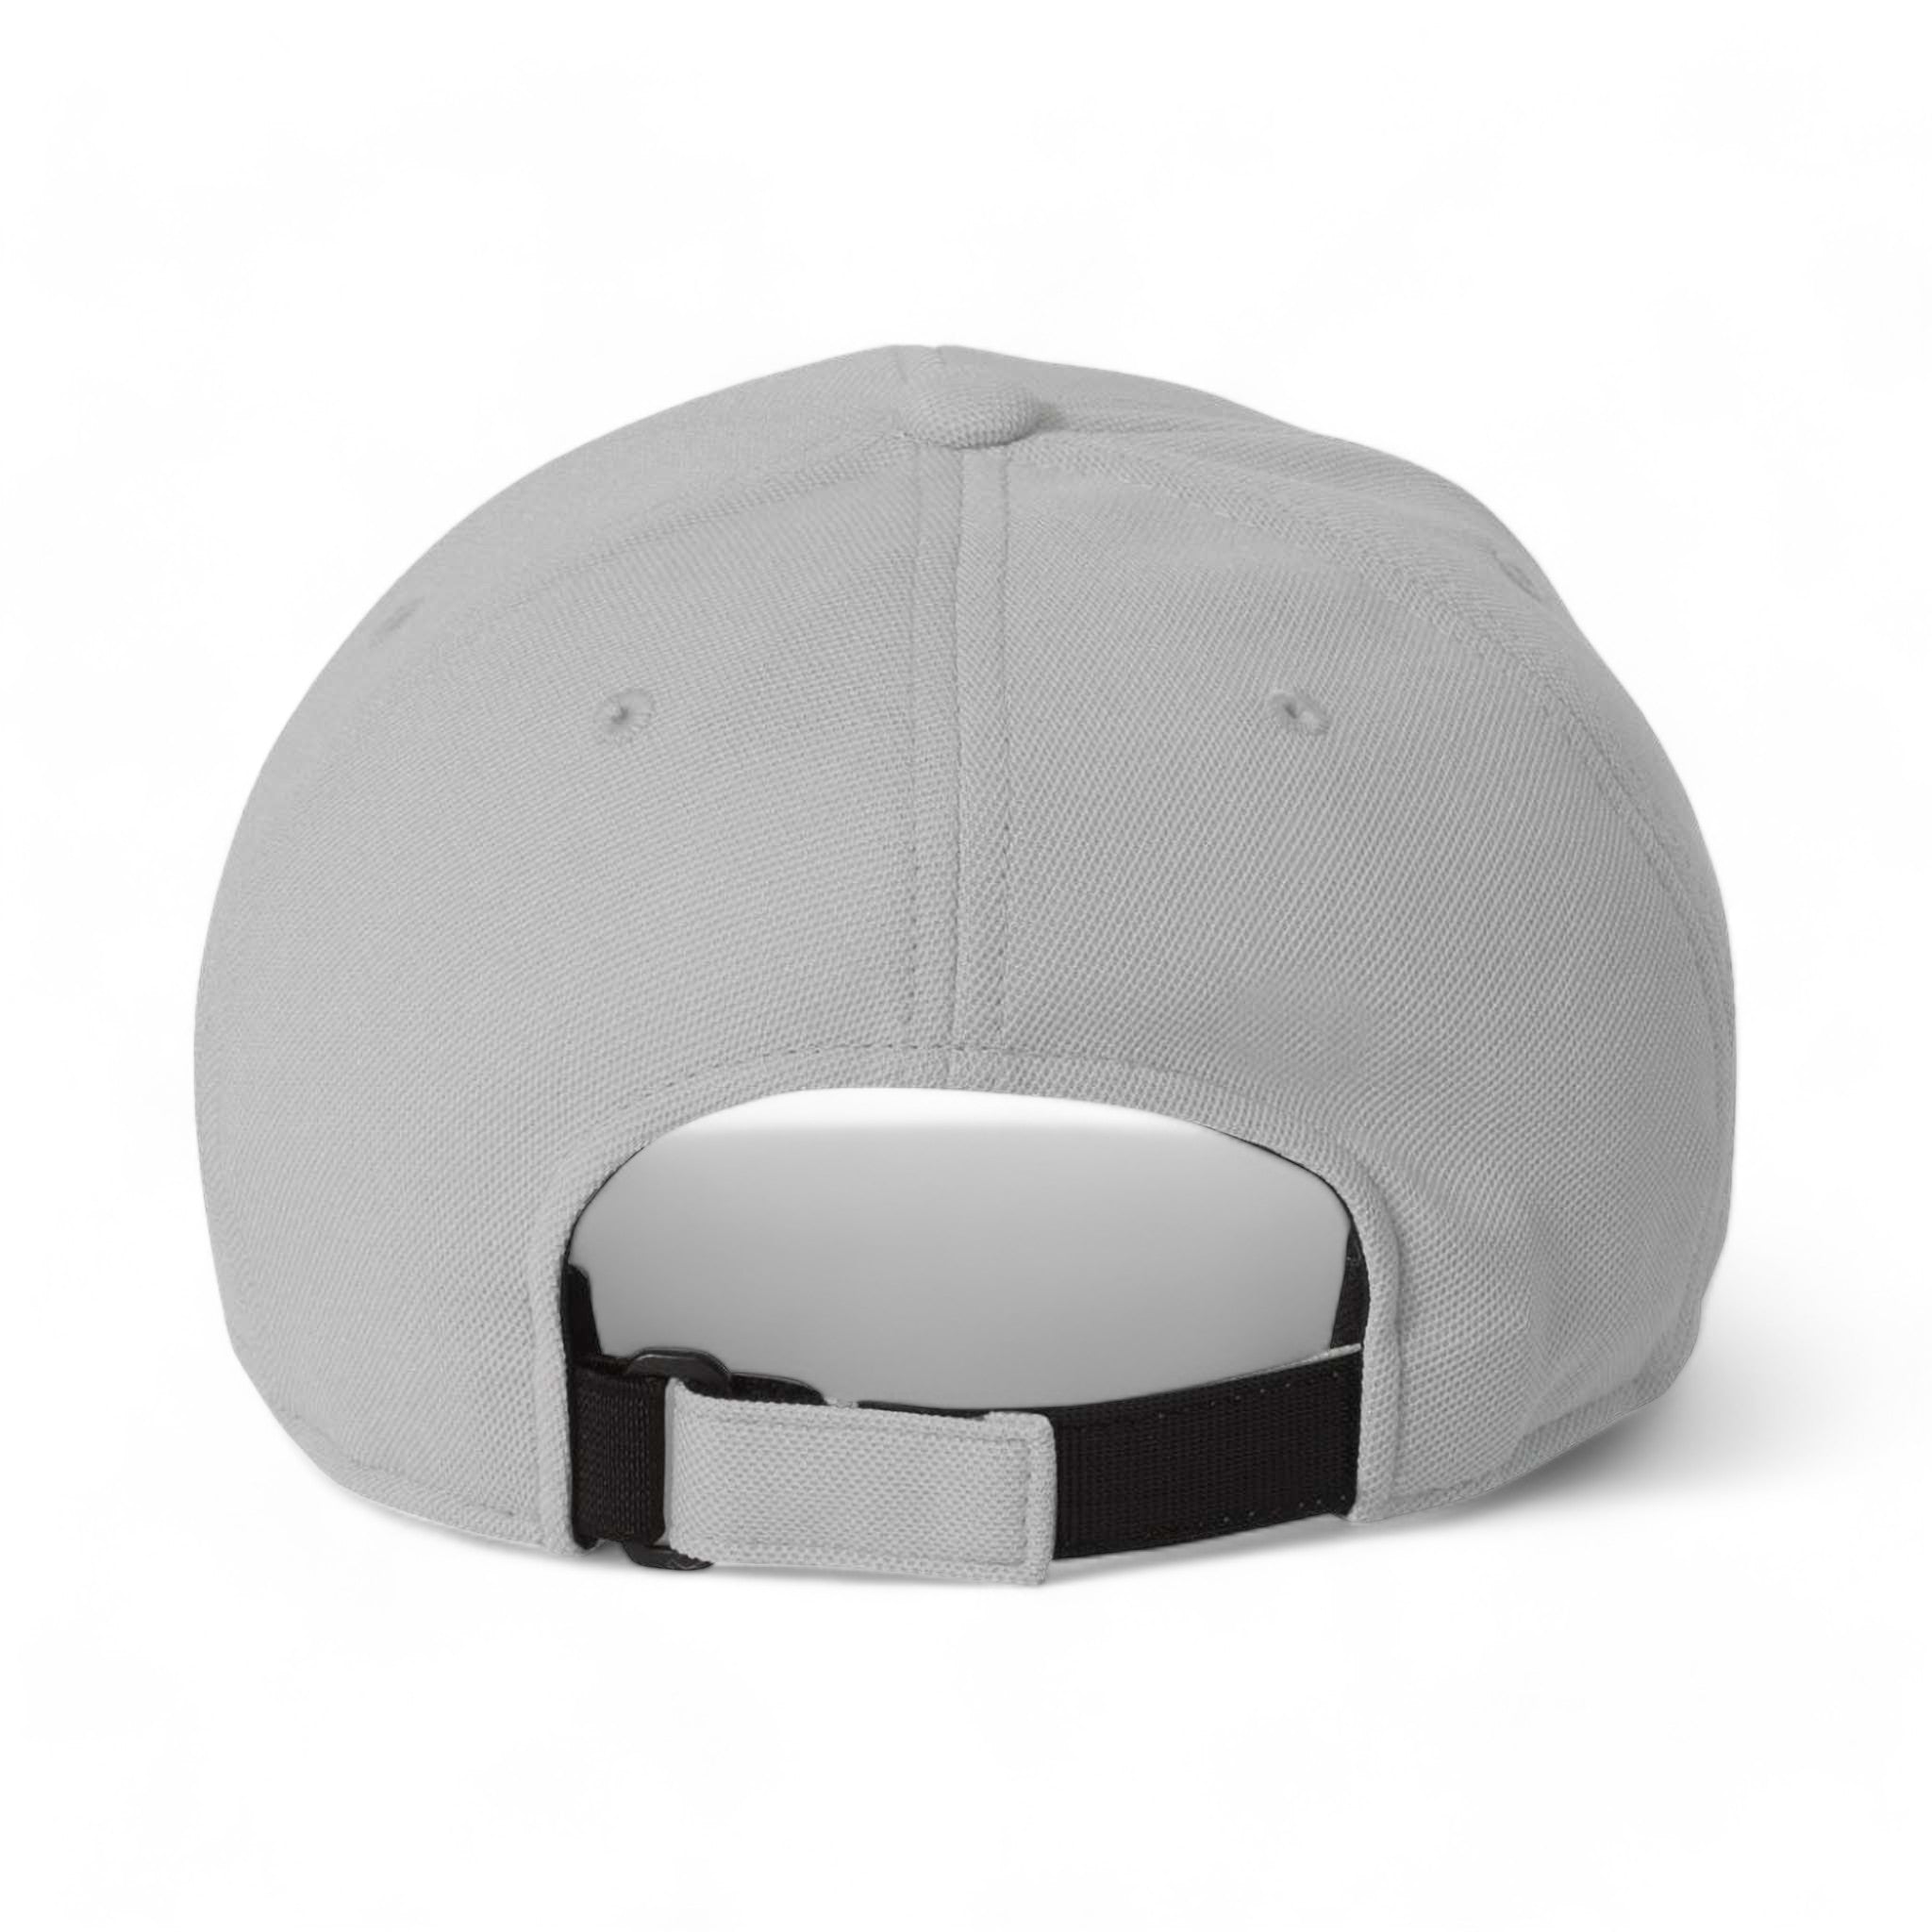 Back view of Flexfit 110P custom hat in silver